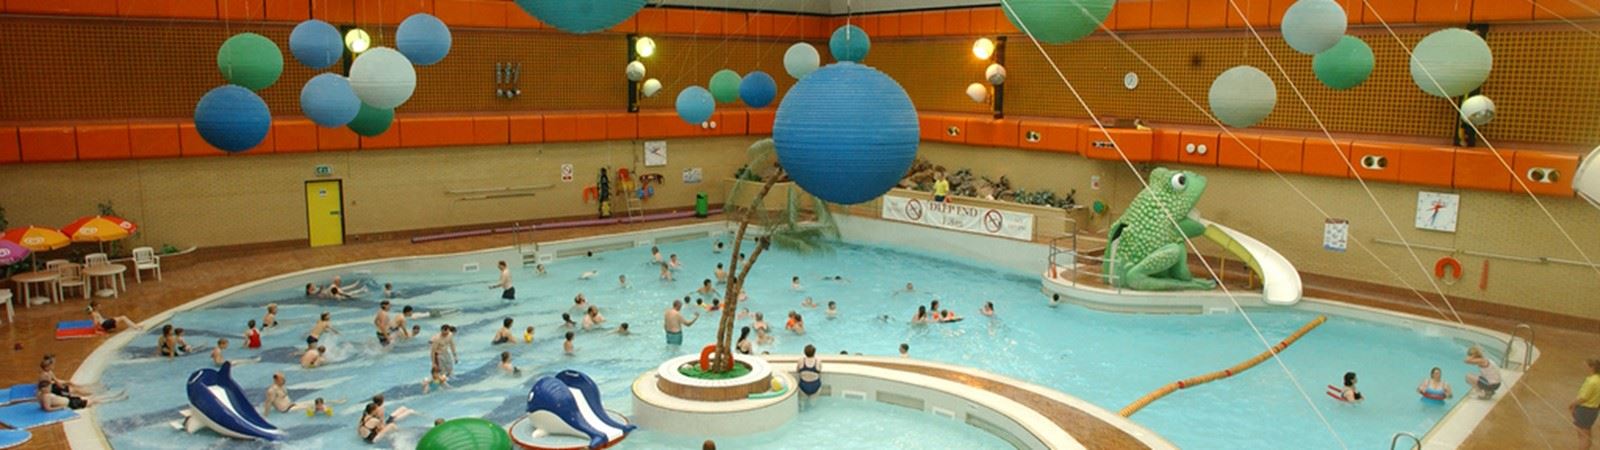 Mariner centre swimming pool